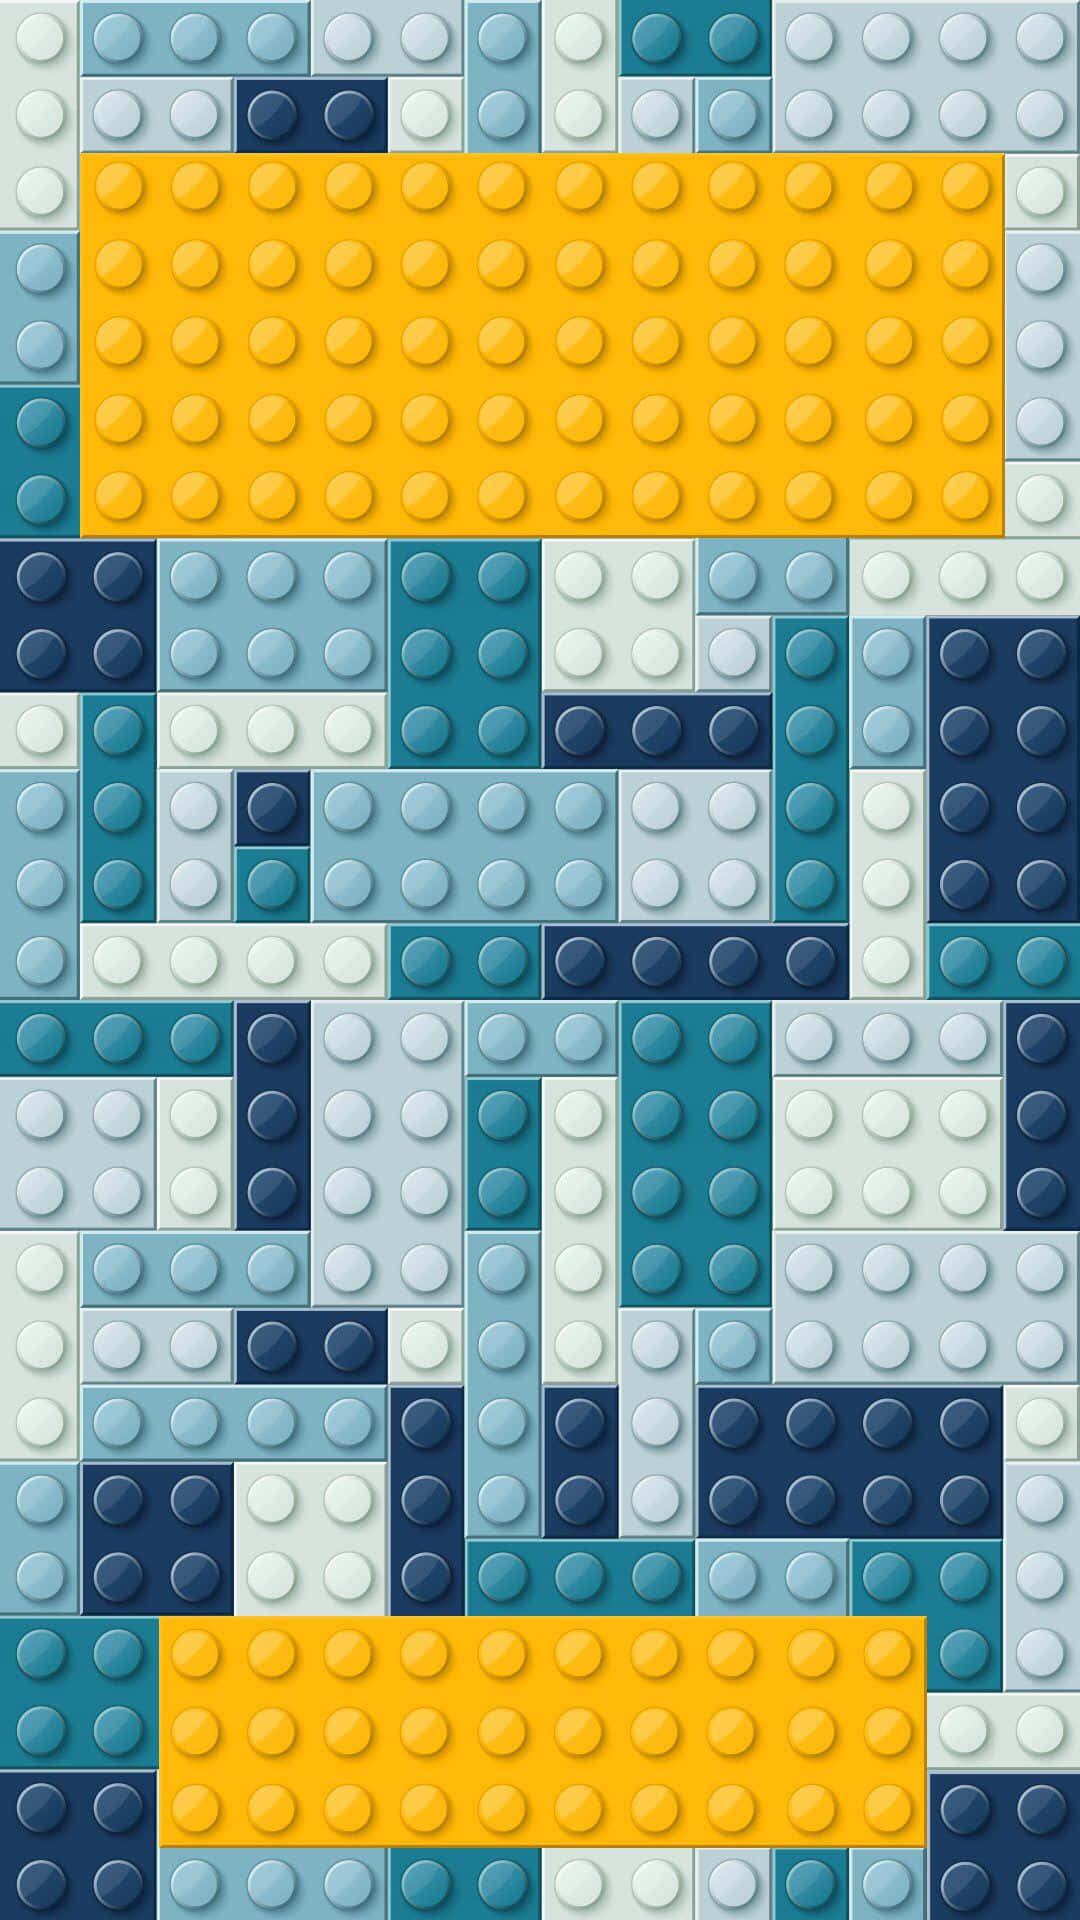 Lego Bricks - Screenshot